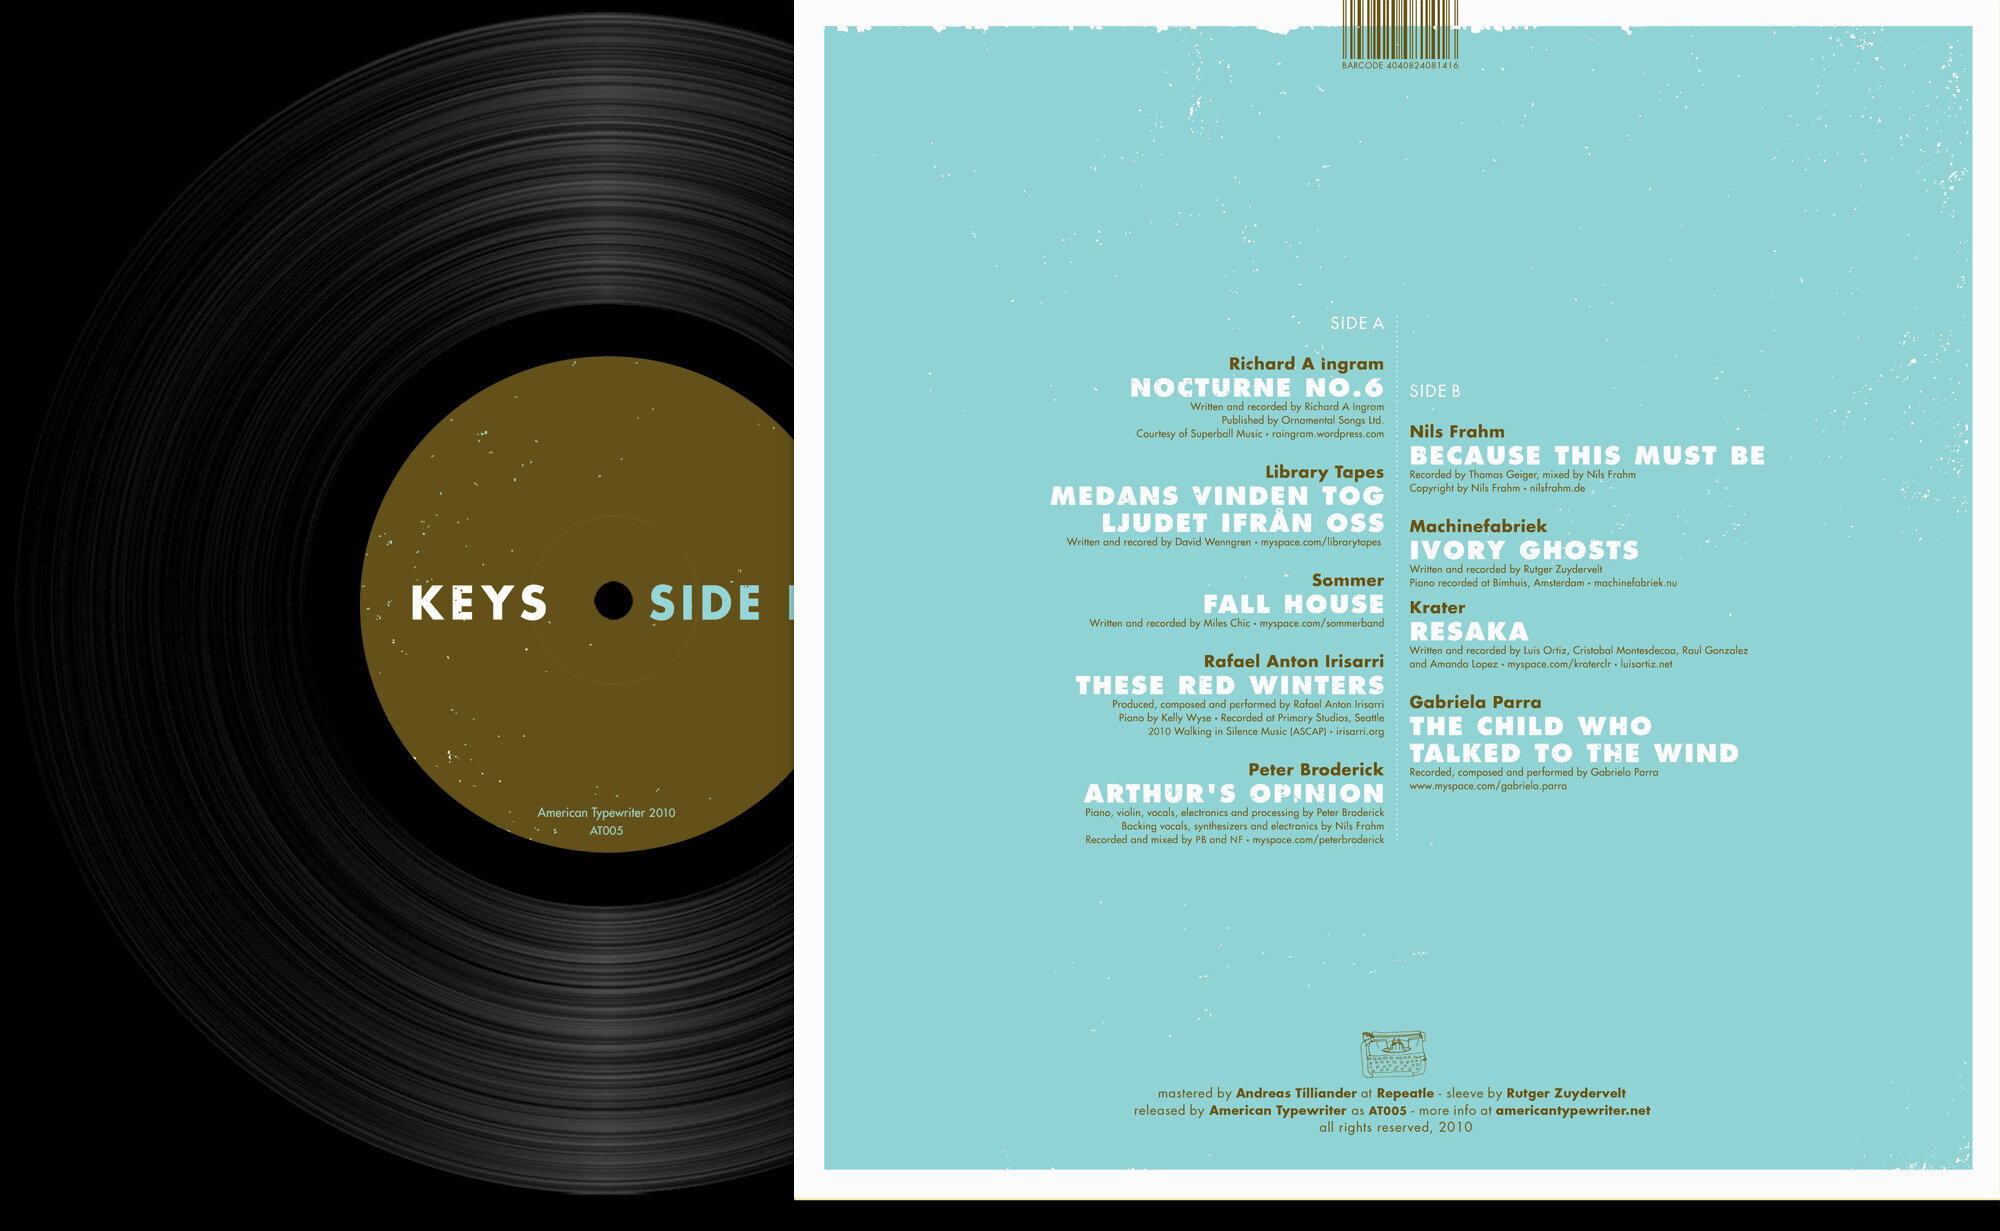  lp back cover – Keys compilation American Typewriter, 2010 